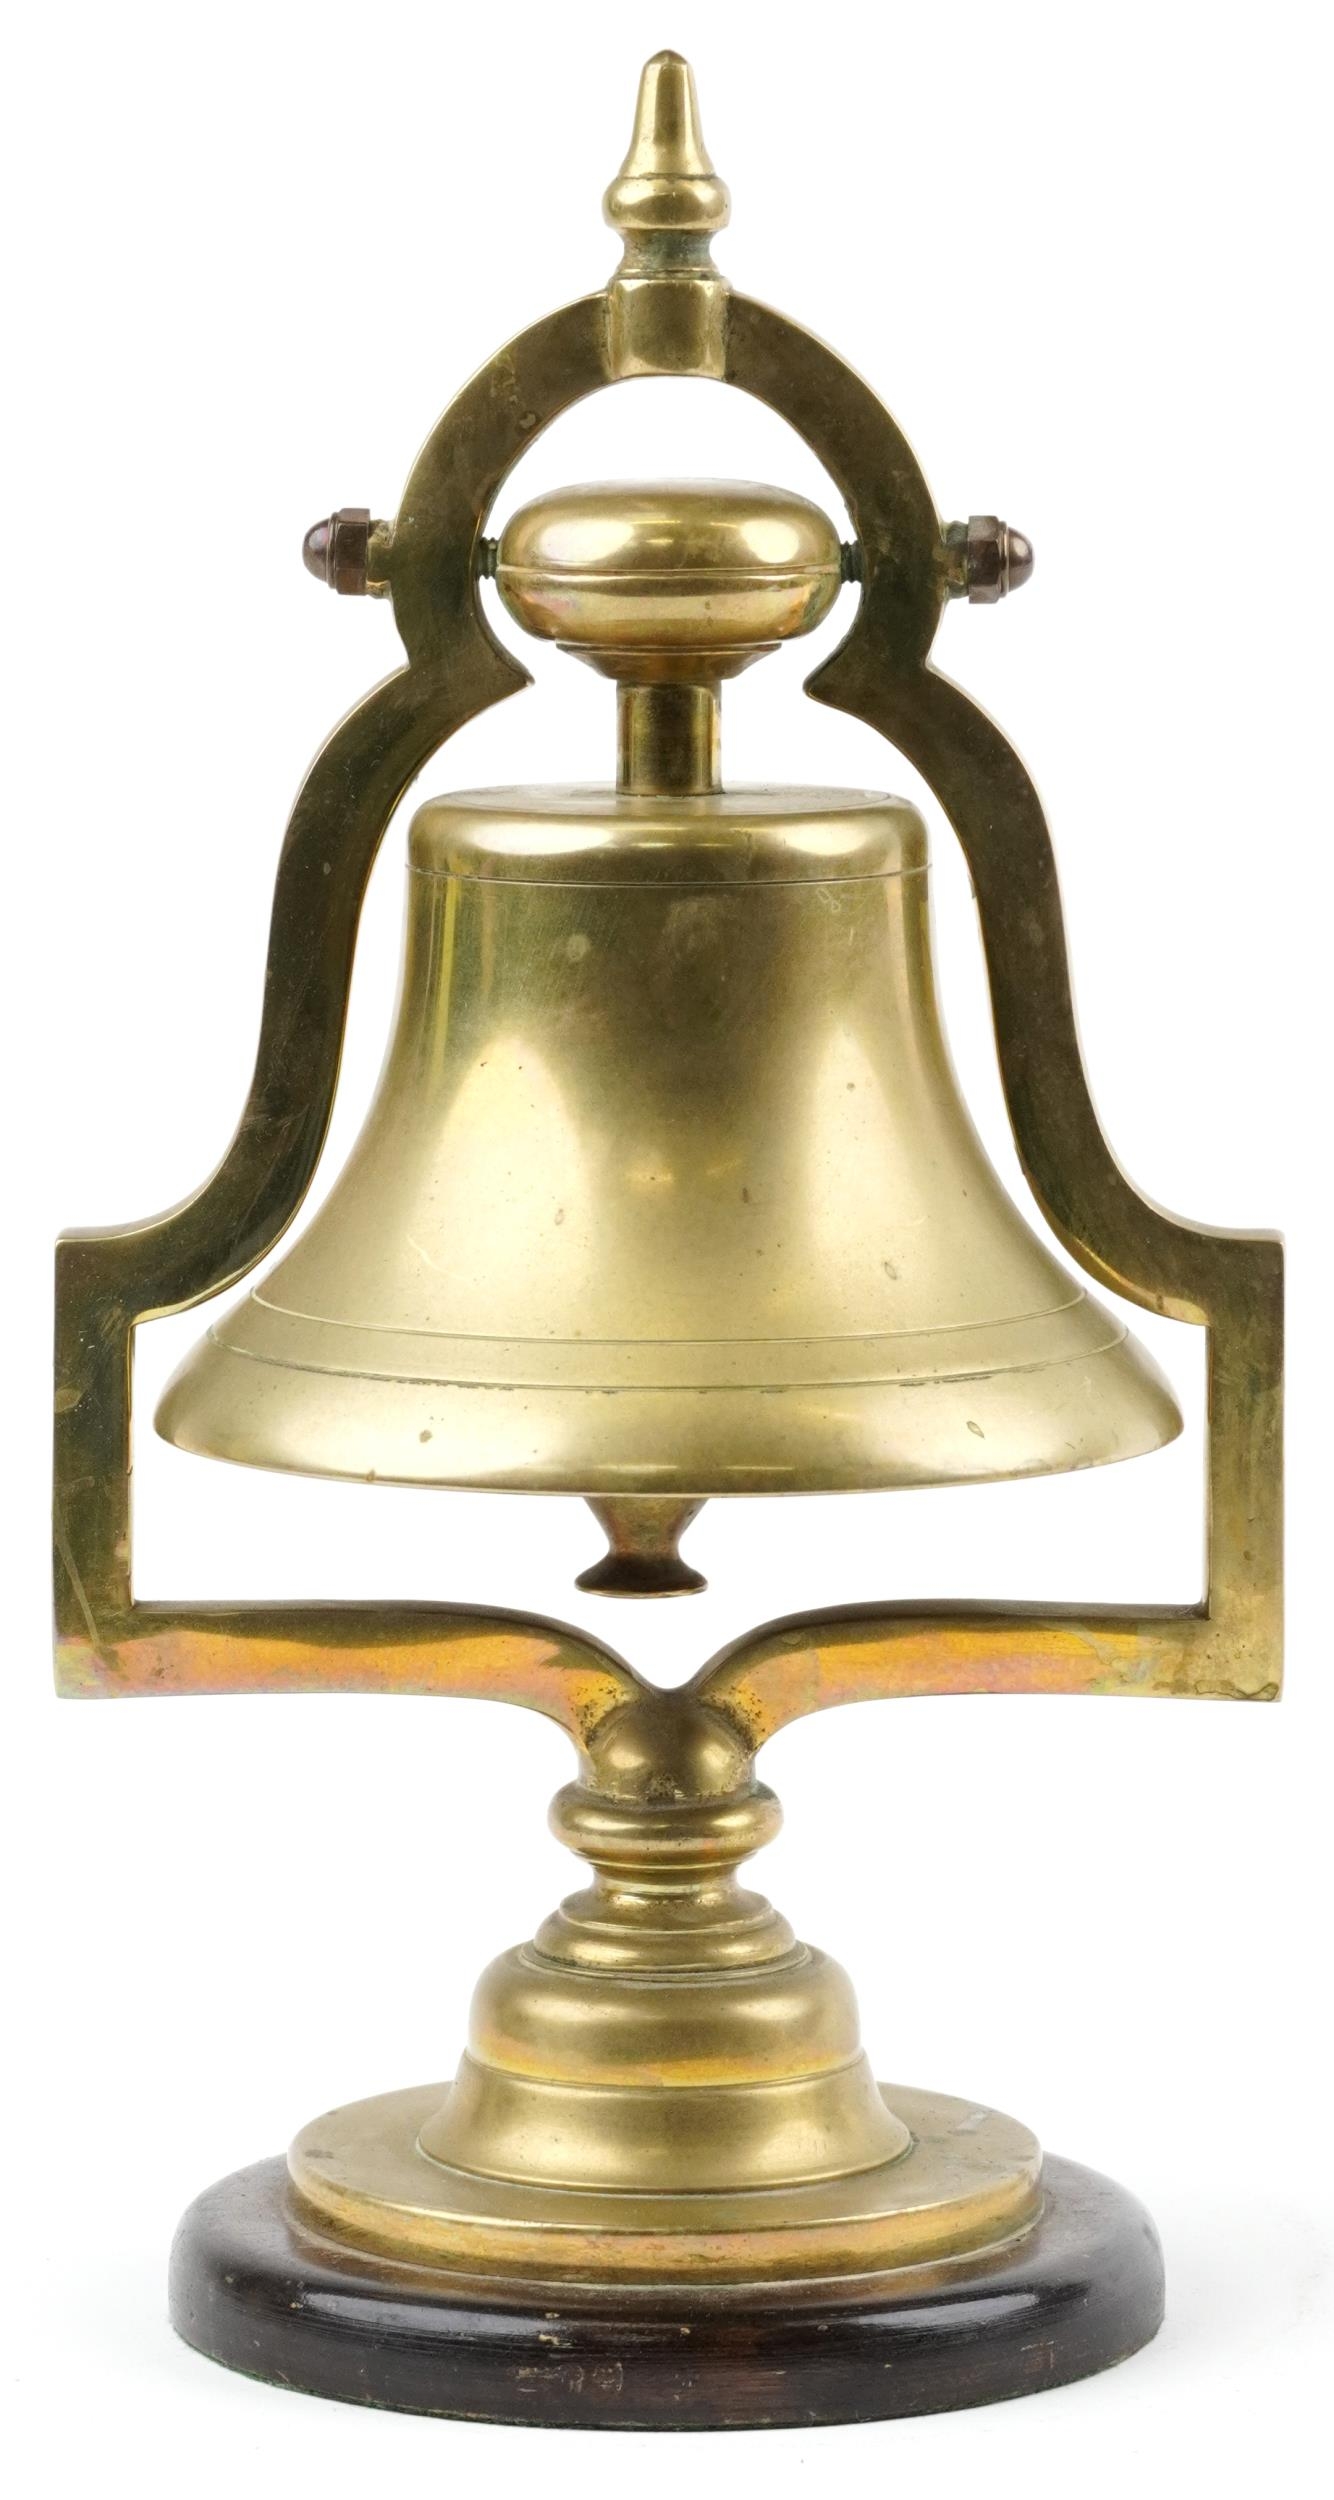 19th/20th century railwayana interest brass railroad bell raised on a circular mahogany base, 34cm - Image 2 of 3